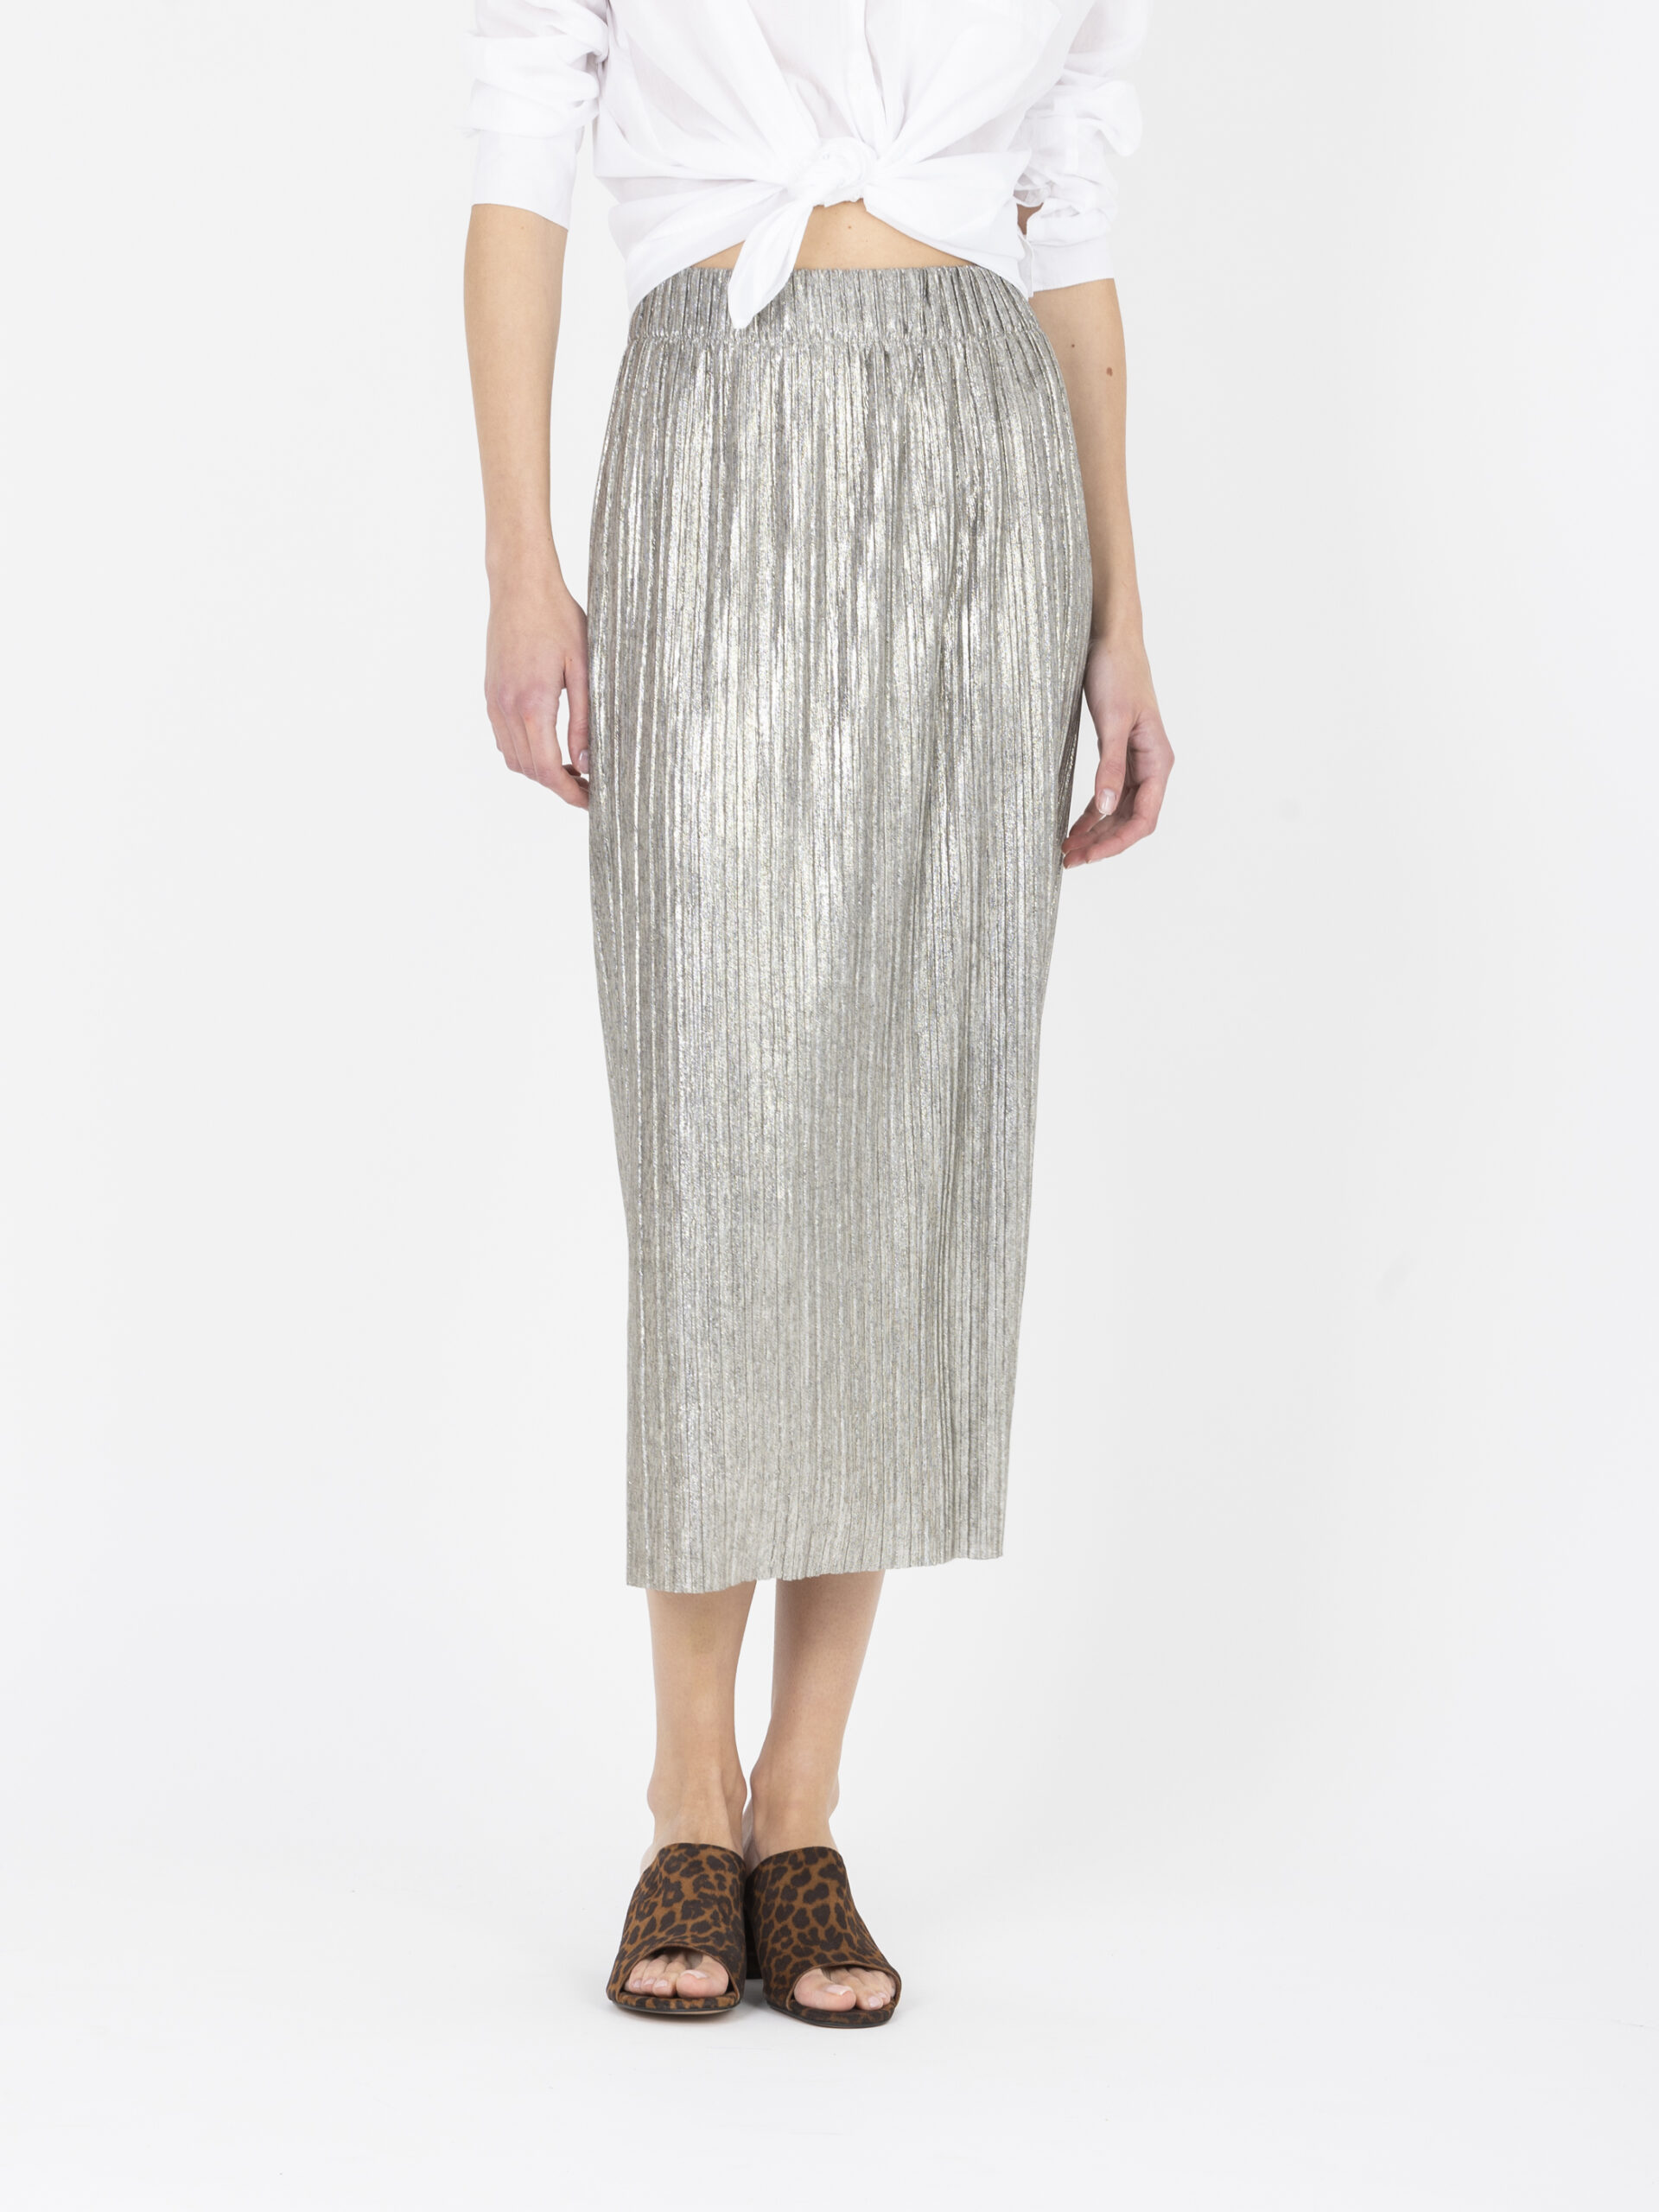 maira-silver-metallic-pletad-skirt-midi-slit-uniforme-athens-greek-designers-limited-matchboxathens